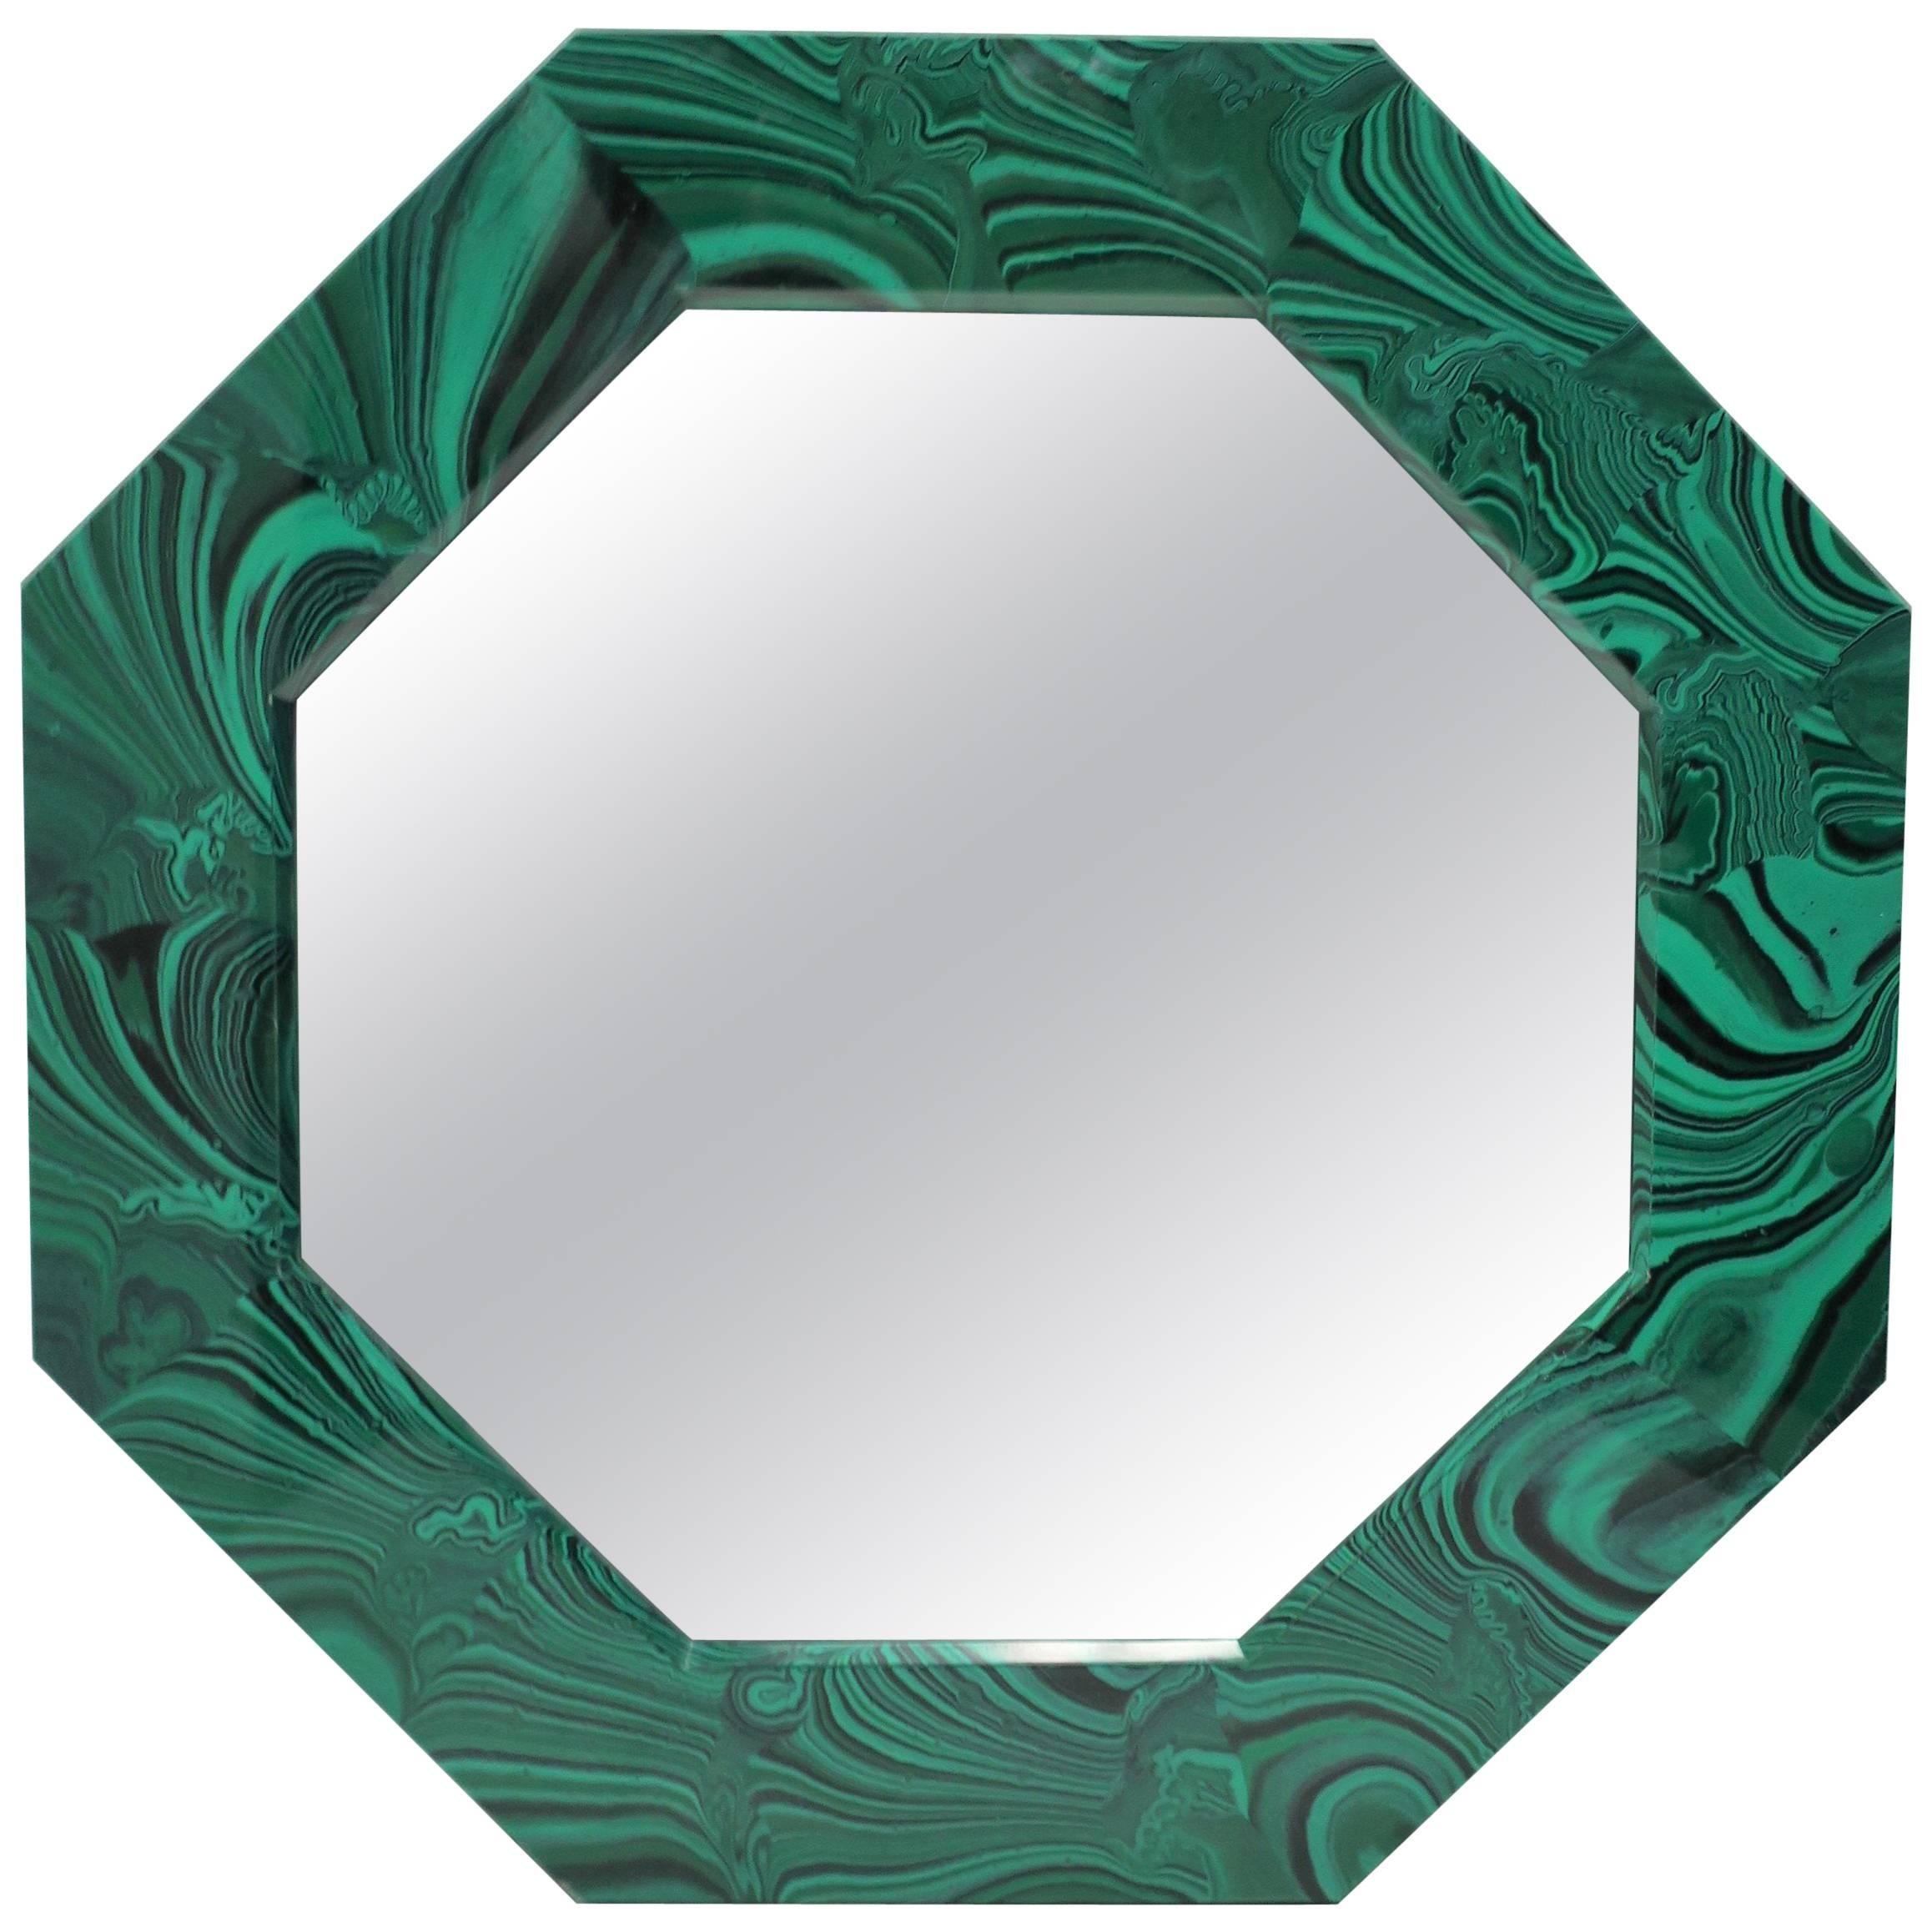 Octagonal Green Malachite Style Wall Mirror